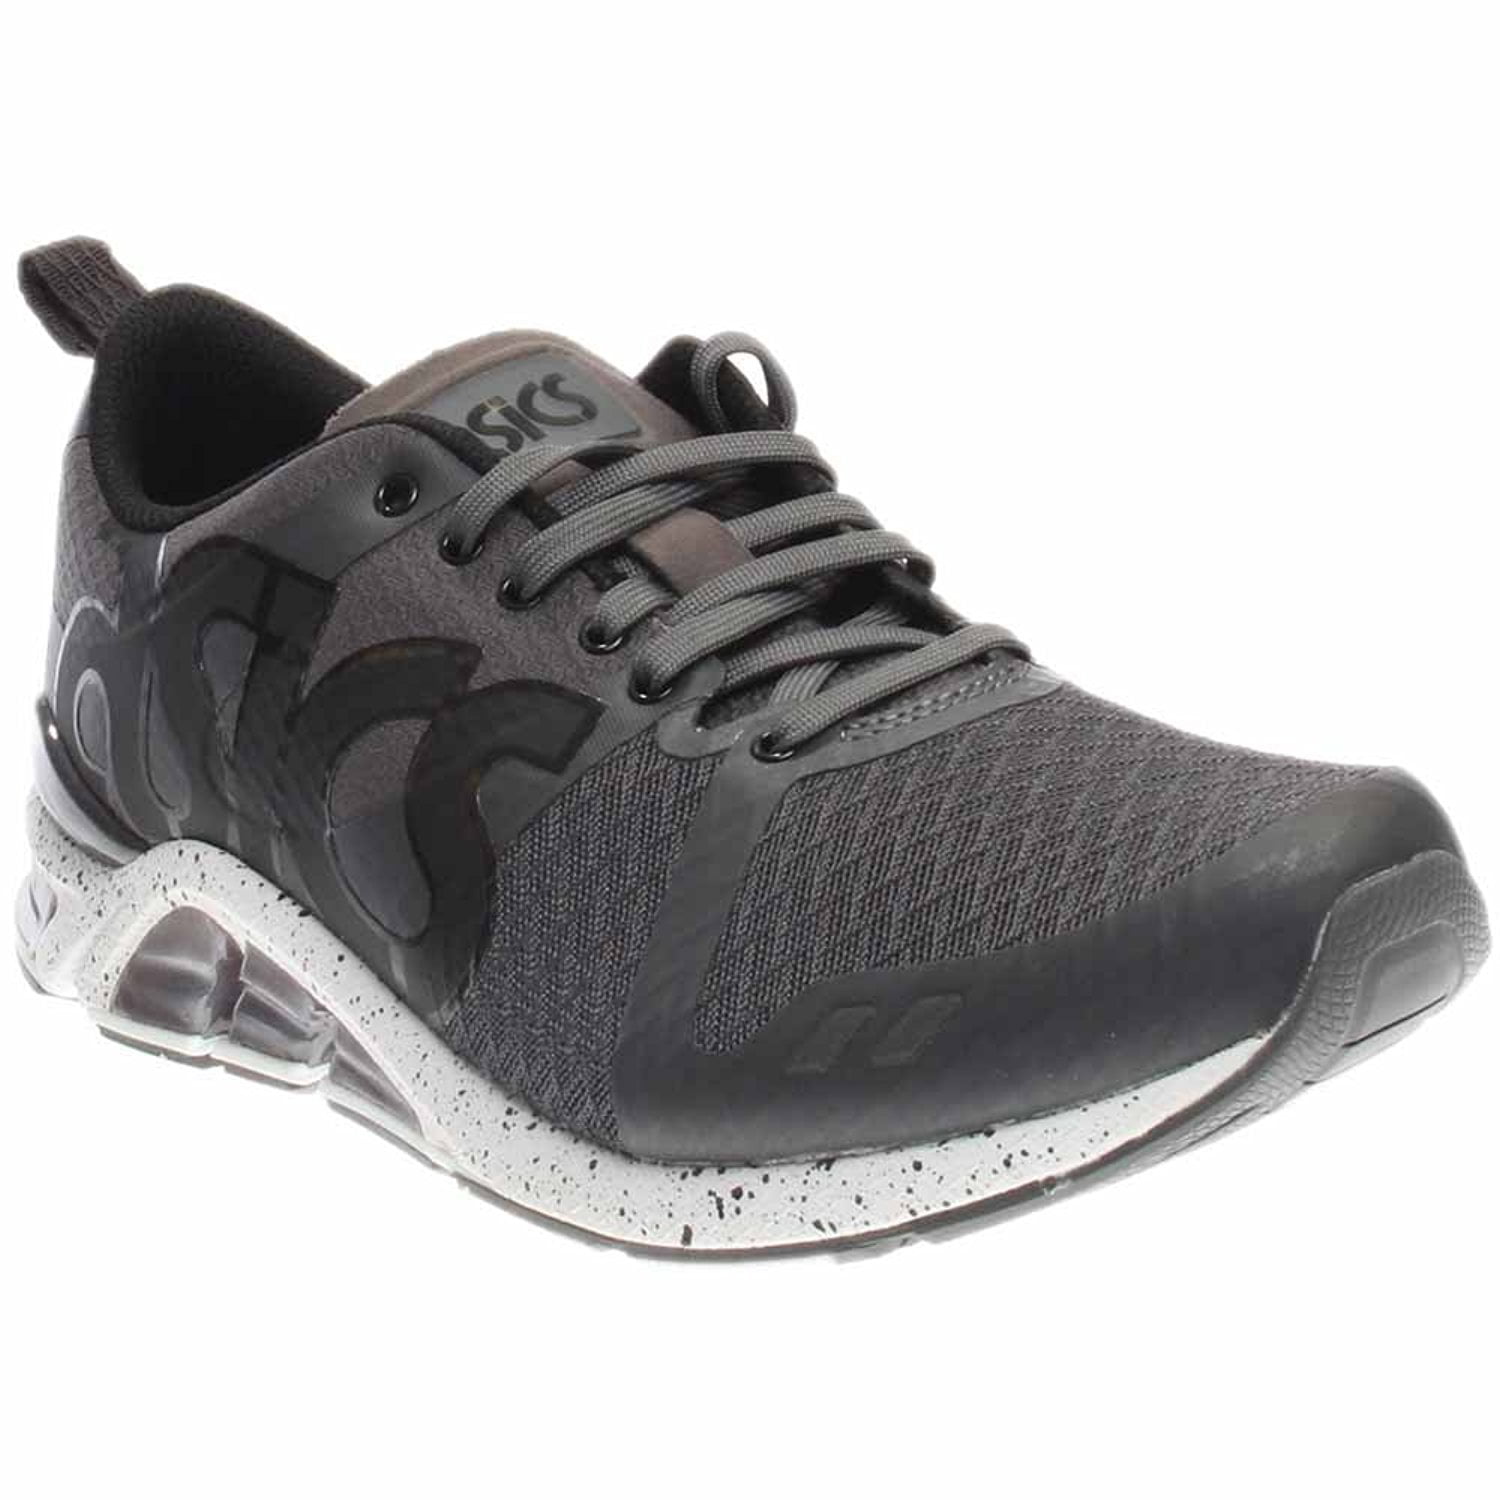 ASICS Gel-Lyte One Retro Running Shoe, Dark Grey/Black, 9.5 M US -